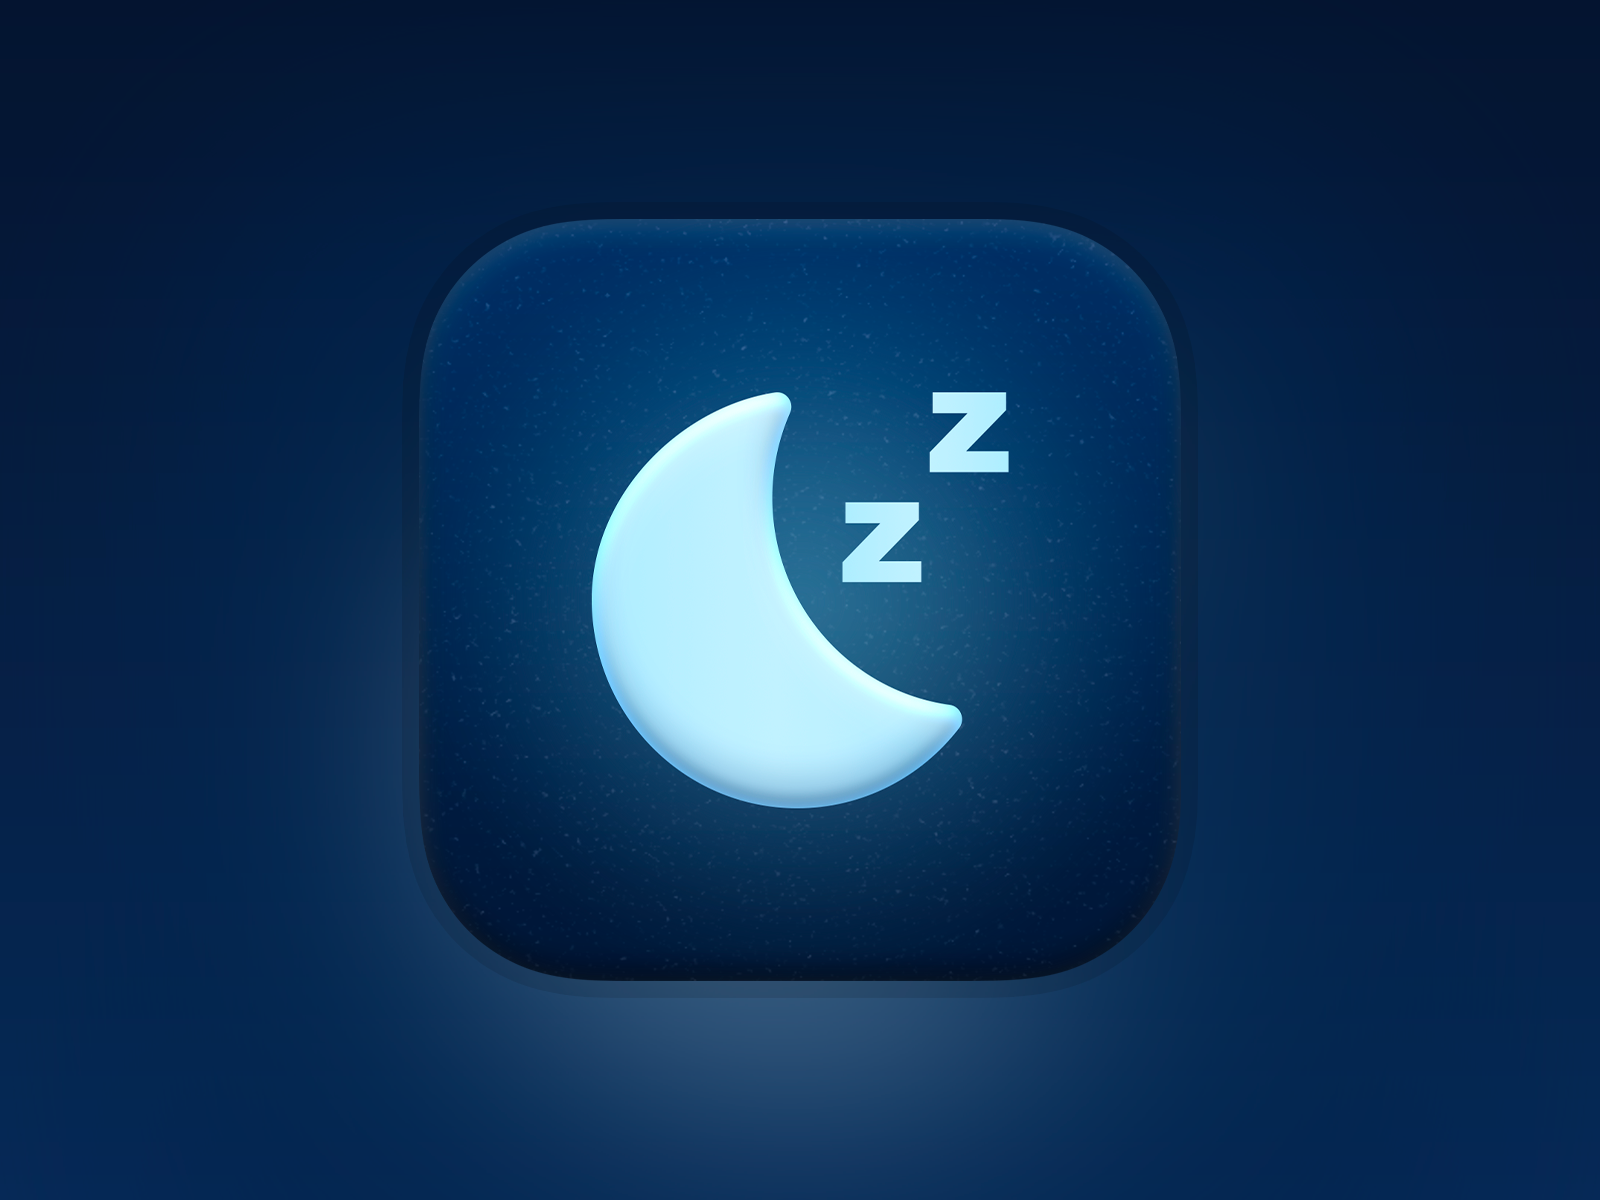 App icons design idea #31: Sleep & relaxation app icon